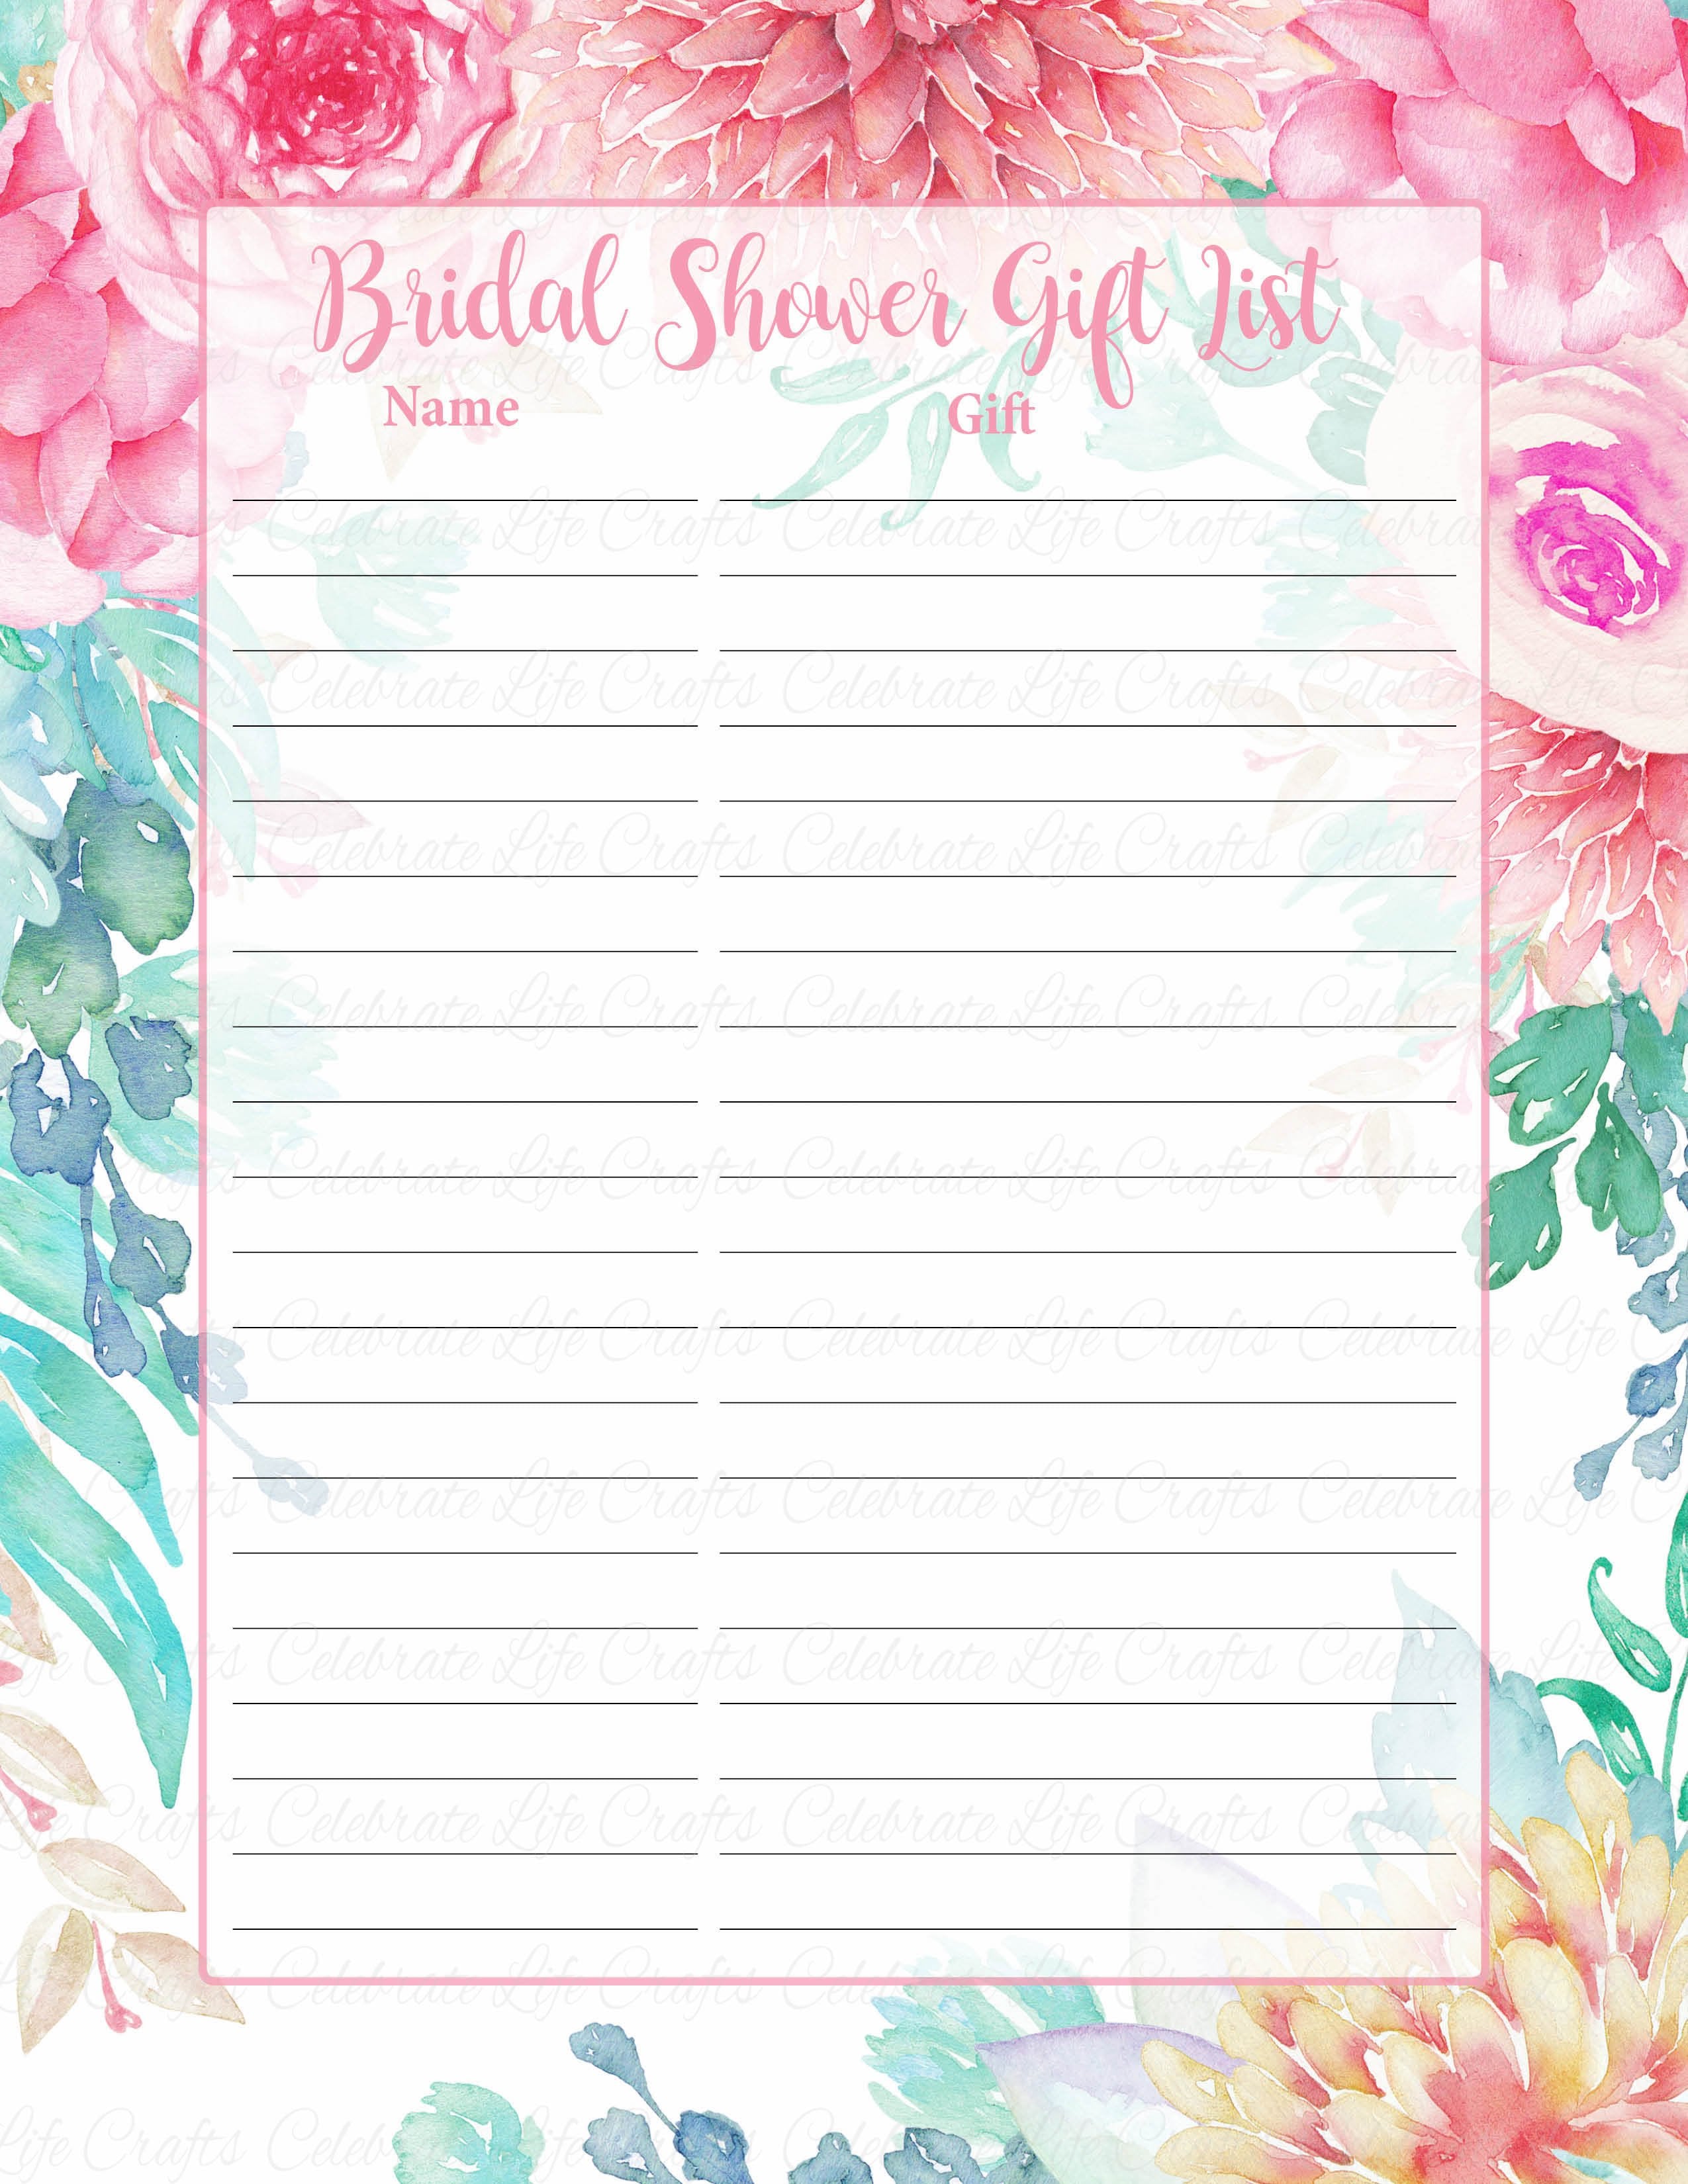 Free Printable Bridal Shower Gift List